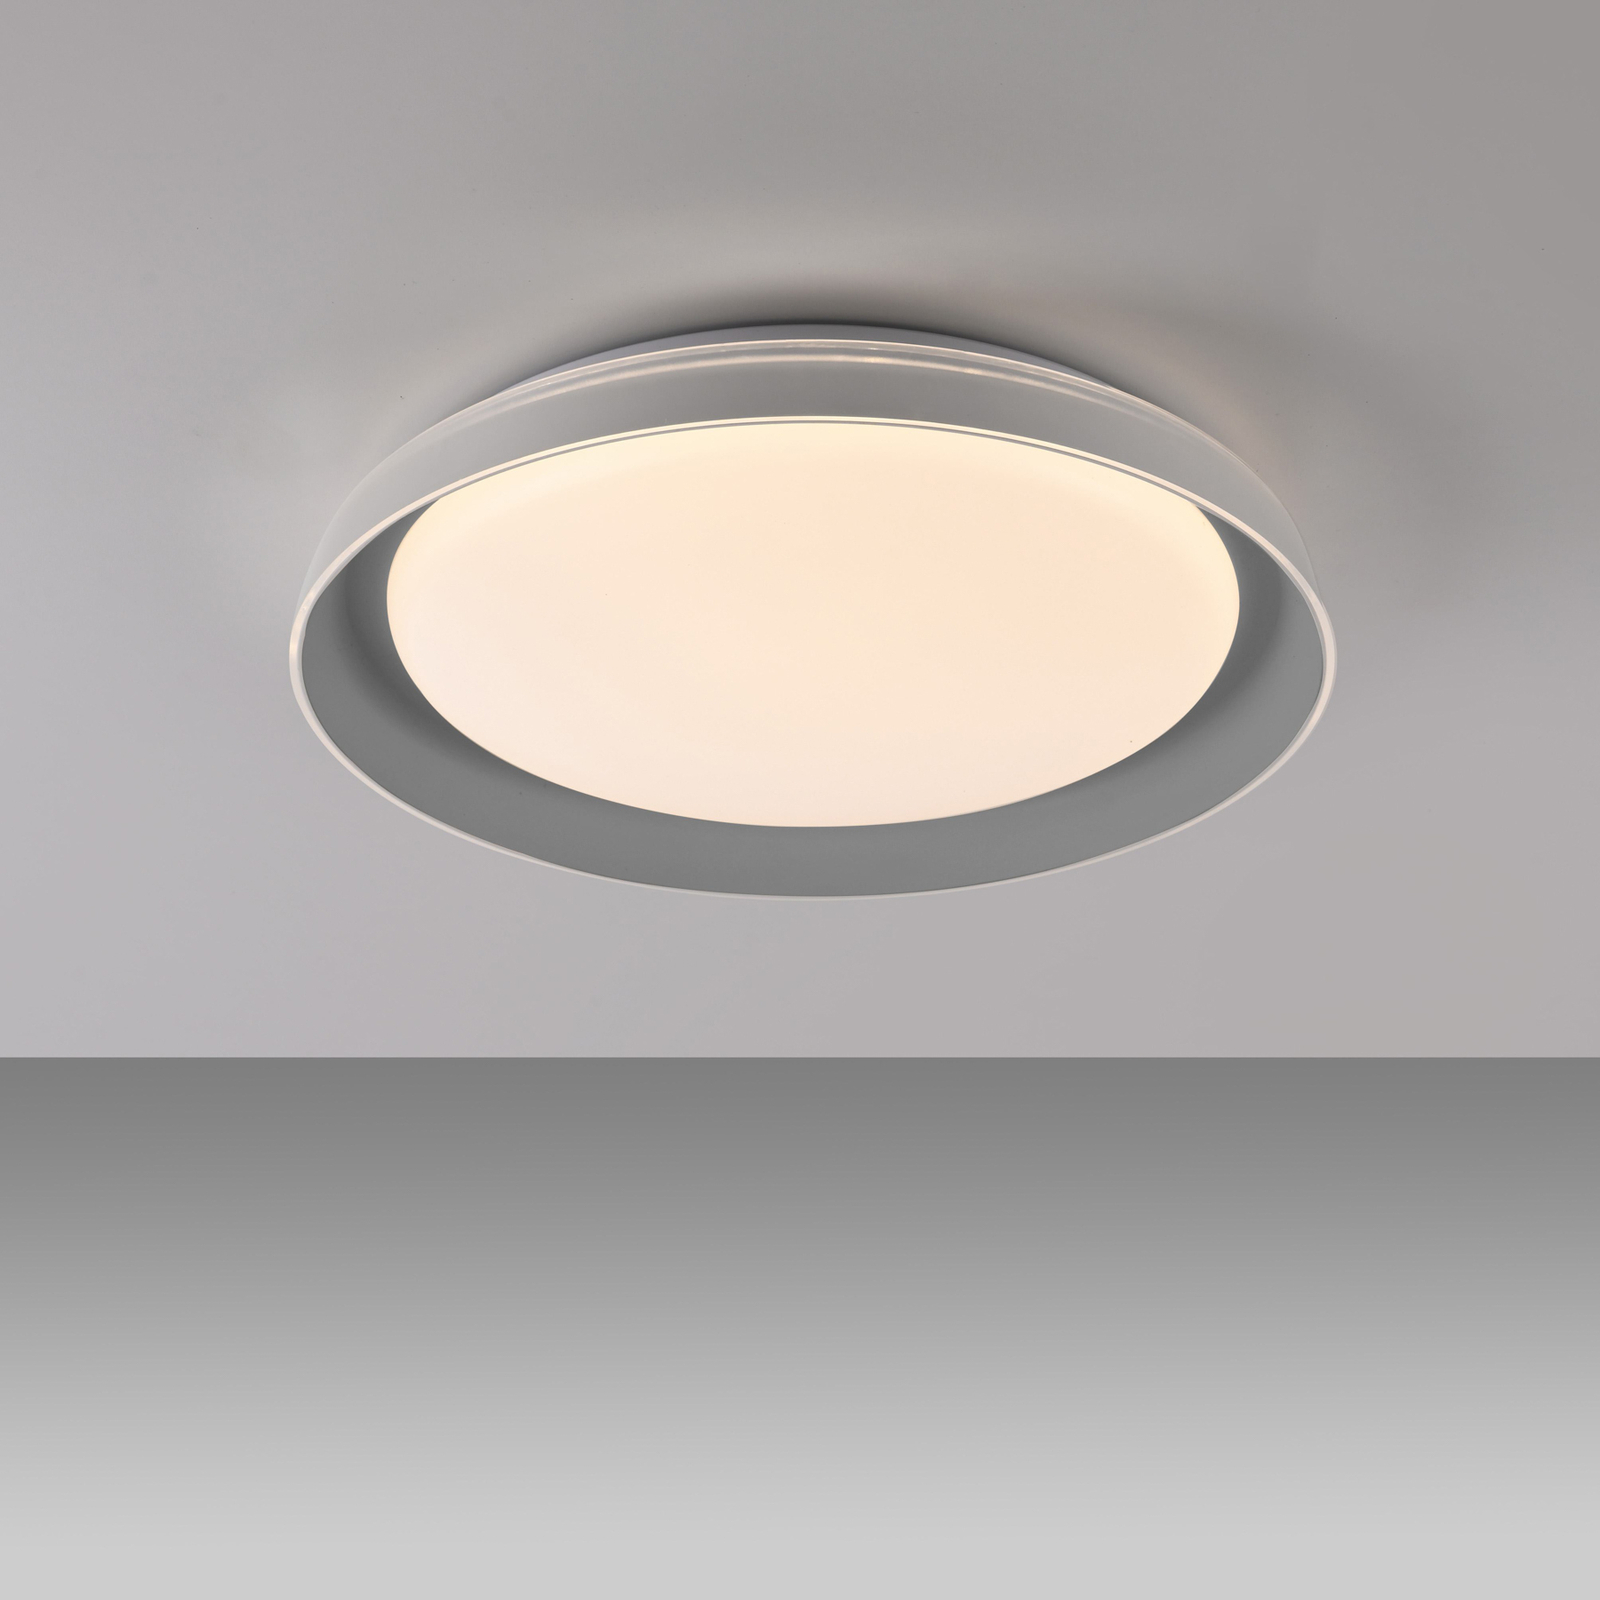 JUST LIGHT. Sati LED ceiling light, plastic, grey